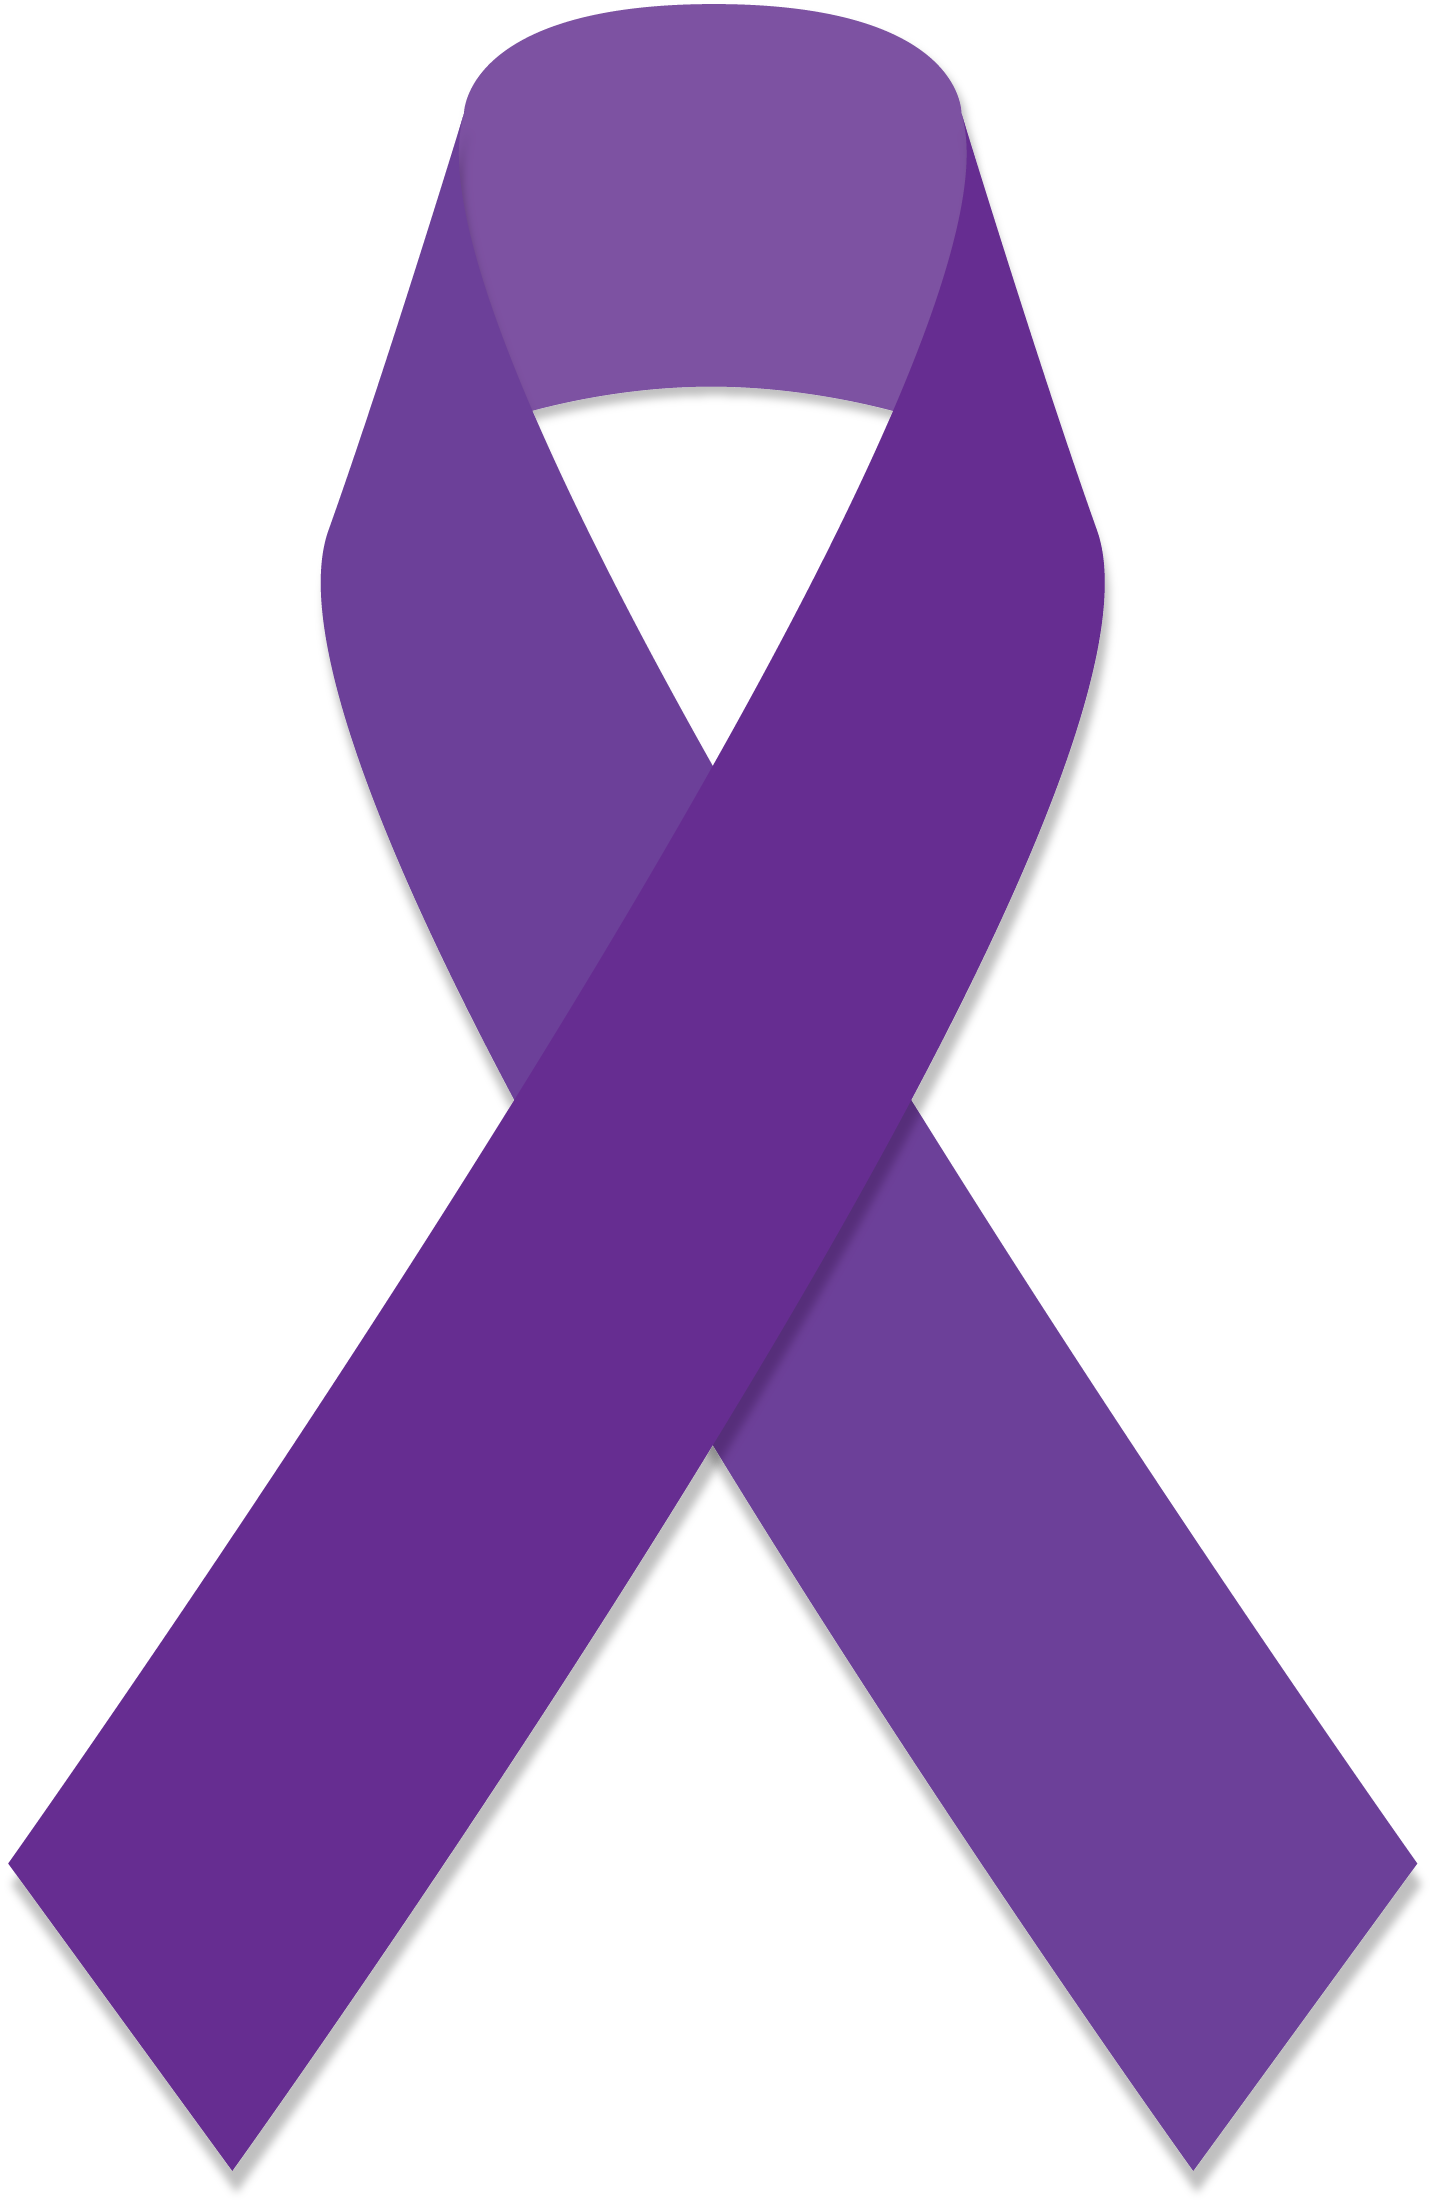 Pancreatic cancer ribbon clipart